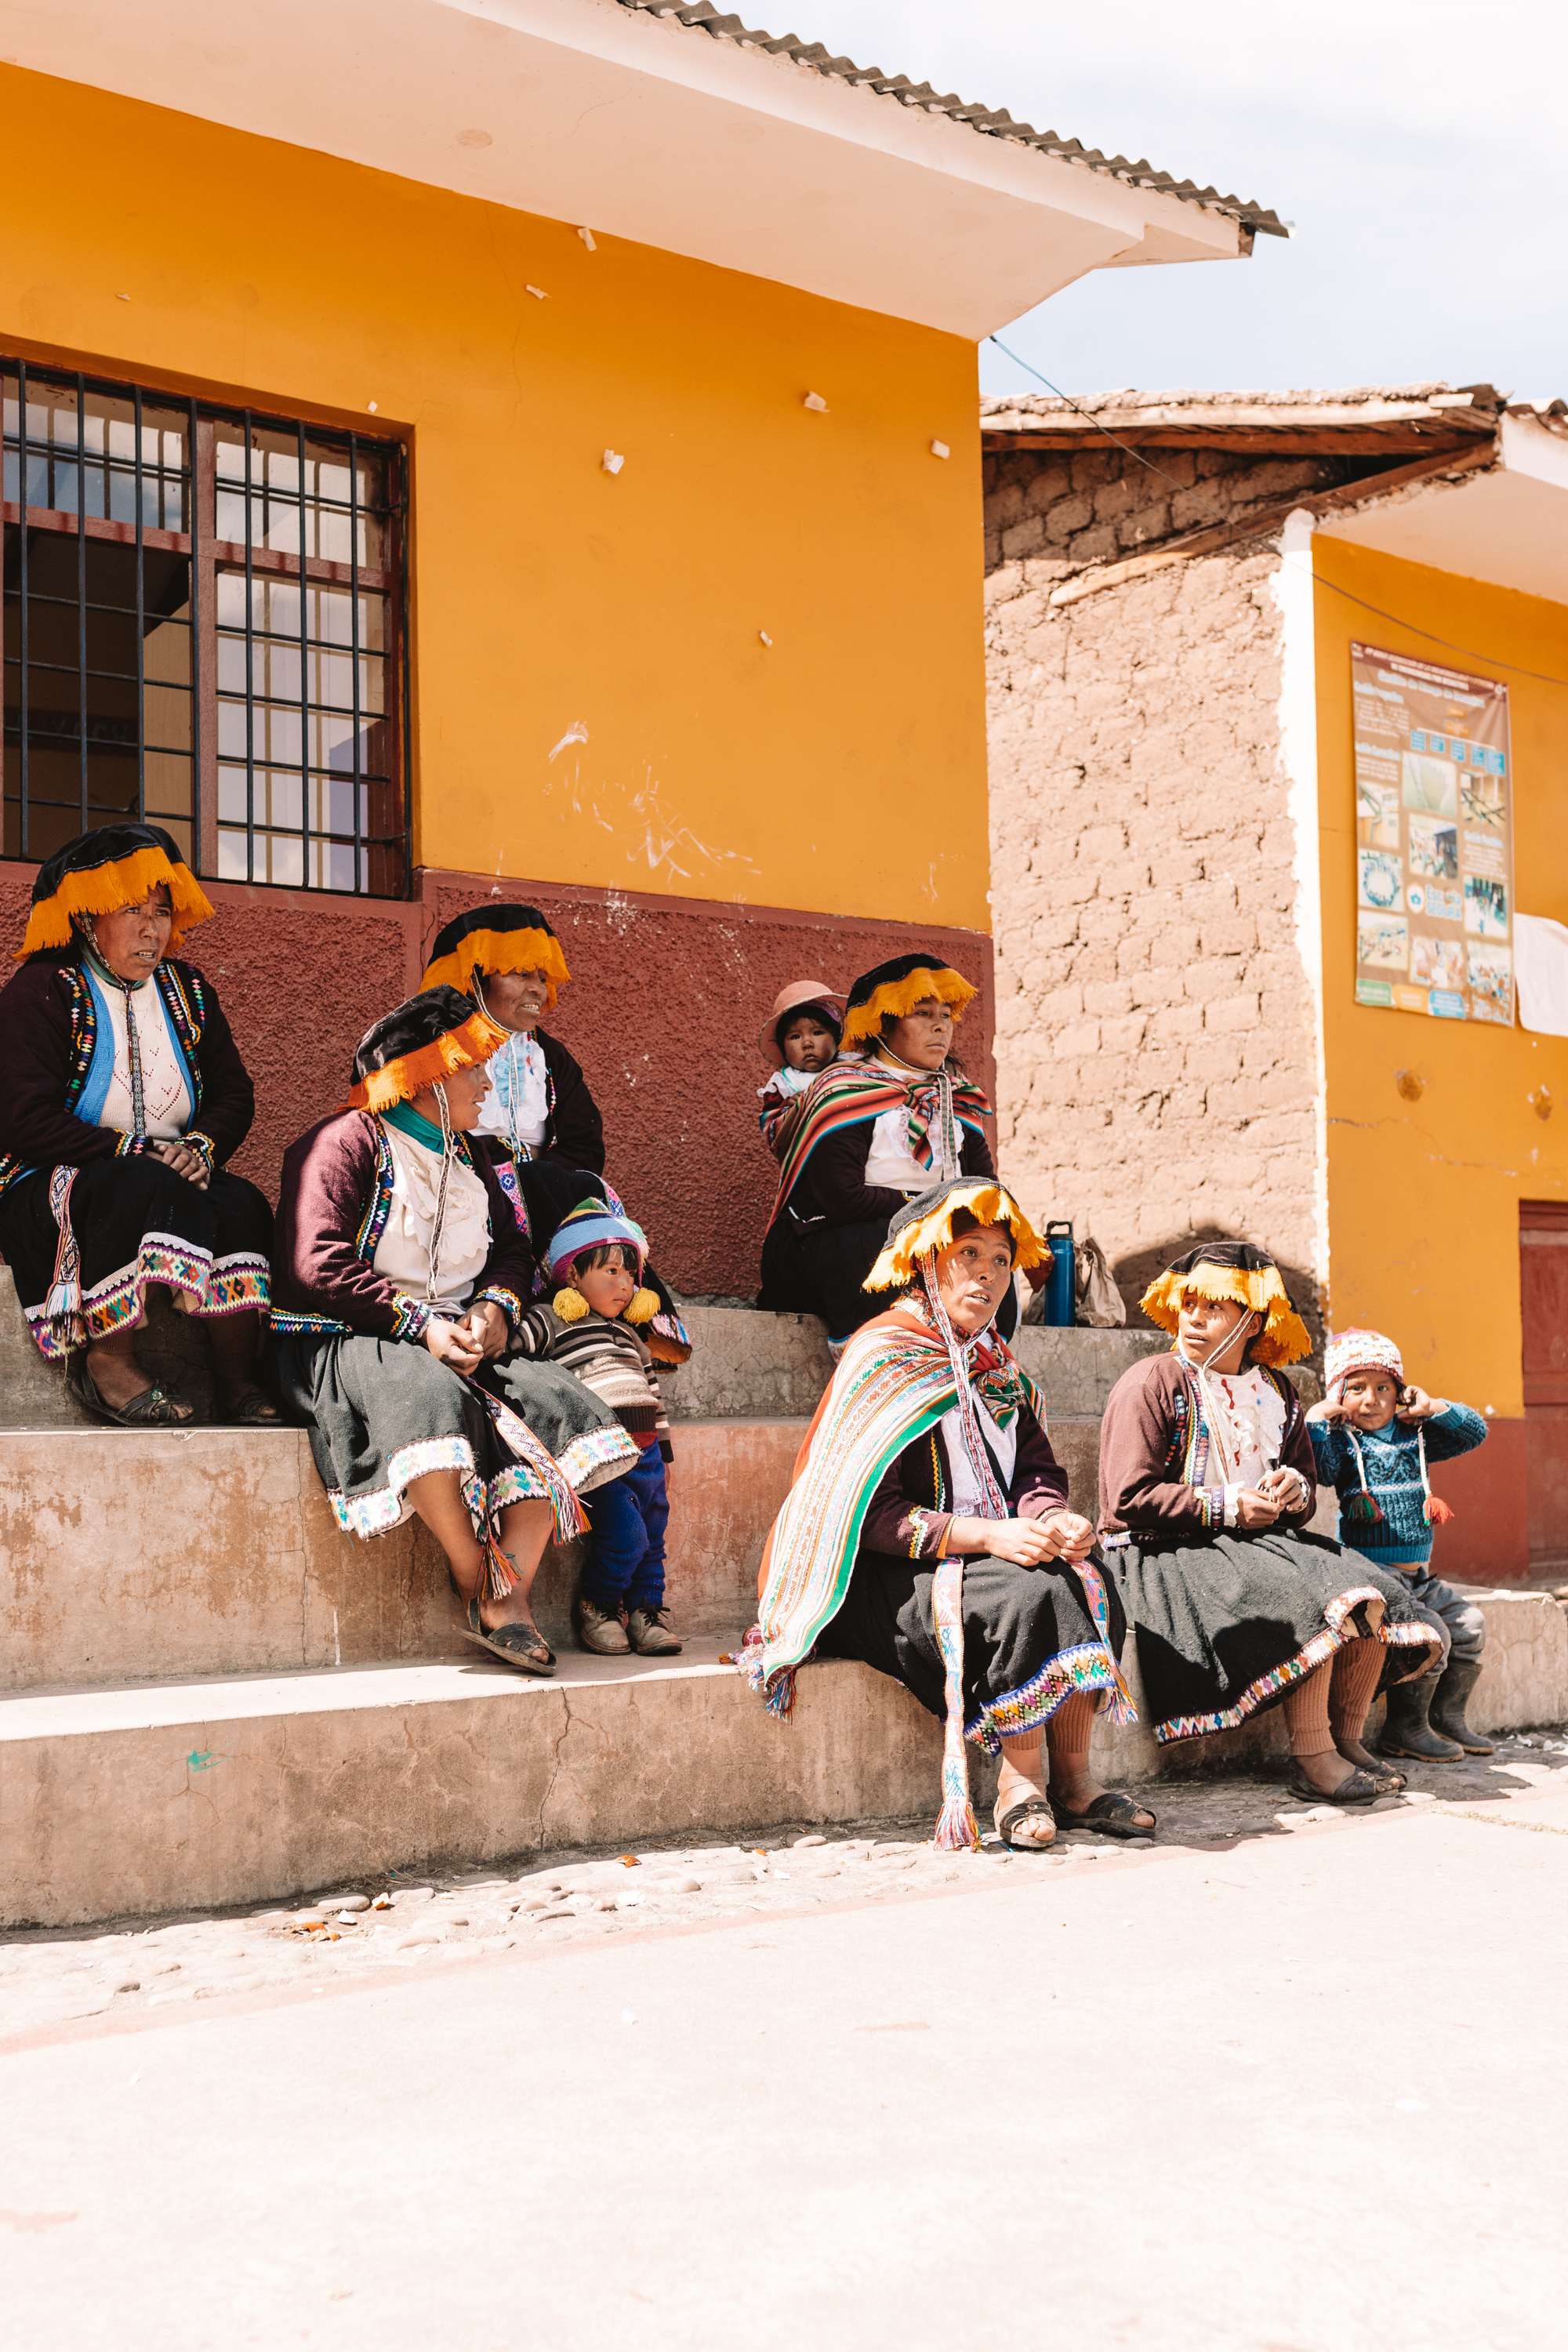 traditional dress for the women in the Quechuan culture of Peru #peru #travel #wanderlust